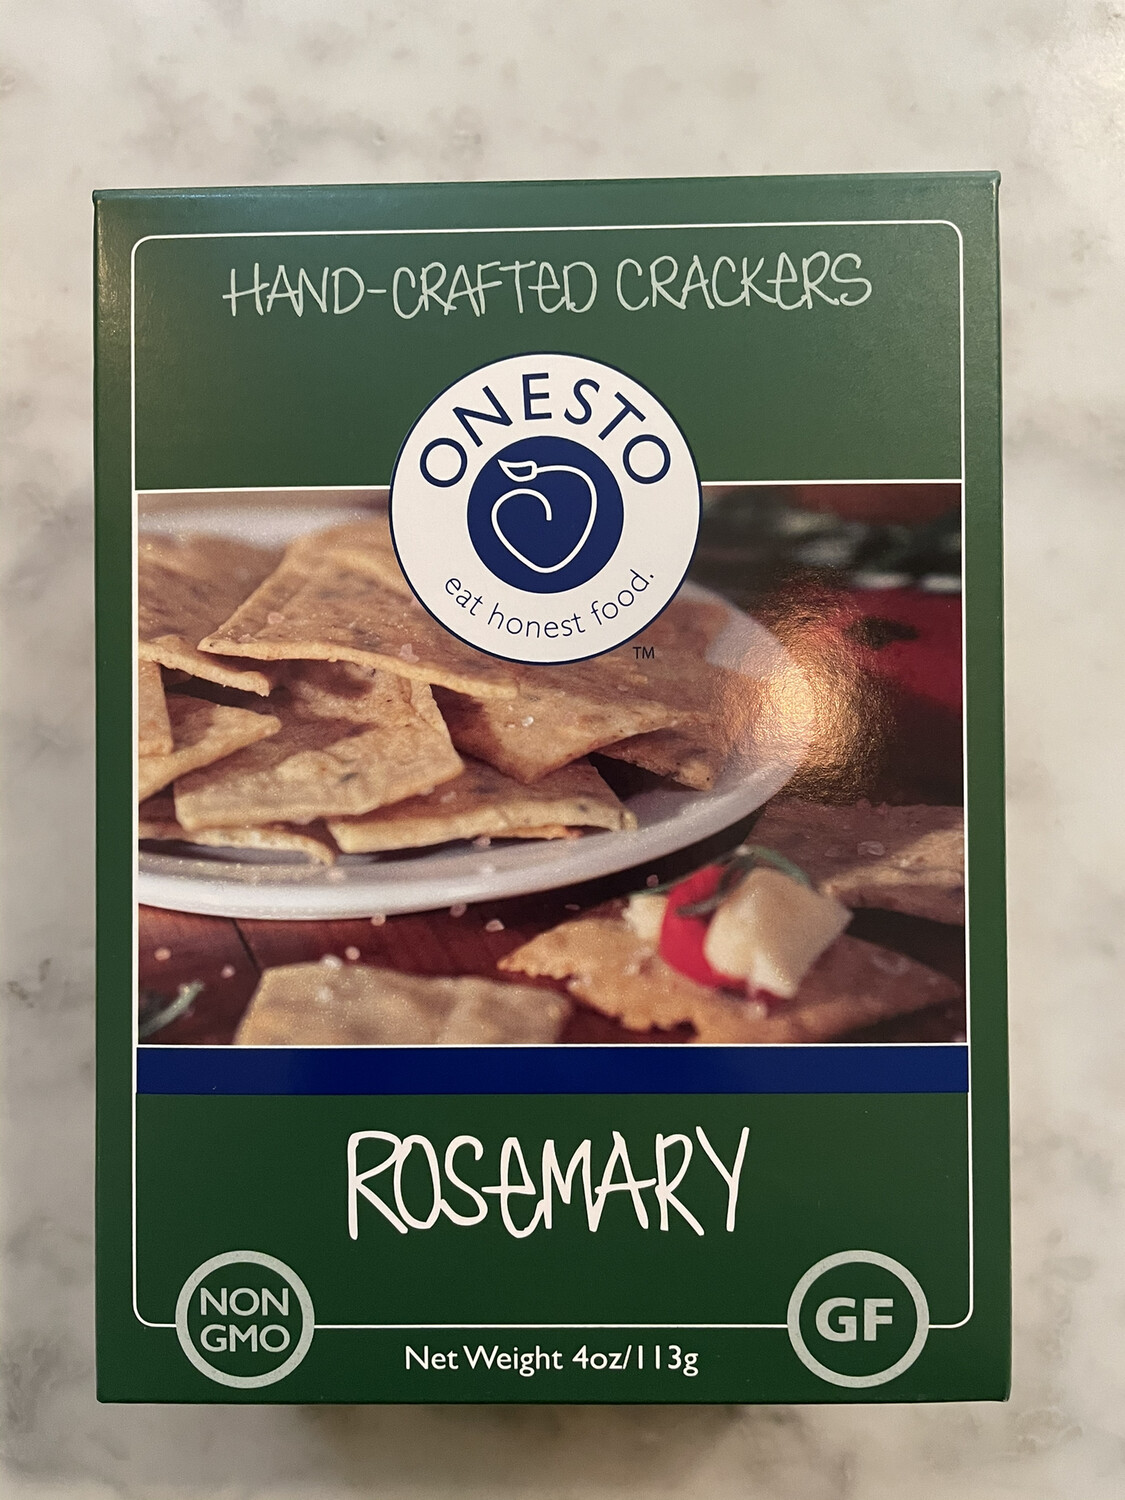 Onesto Rosemary crackers